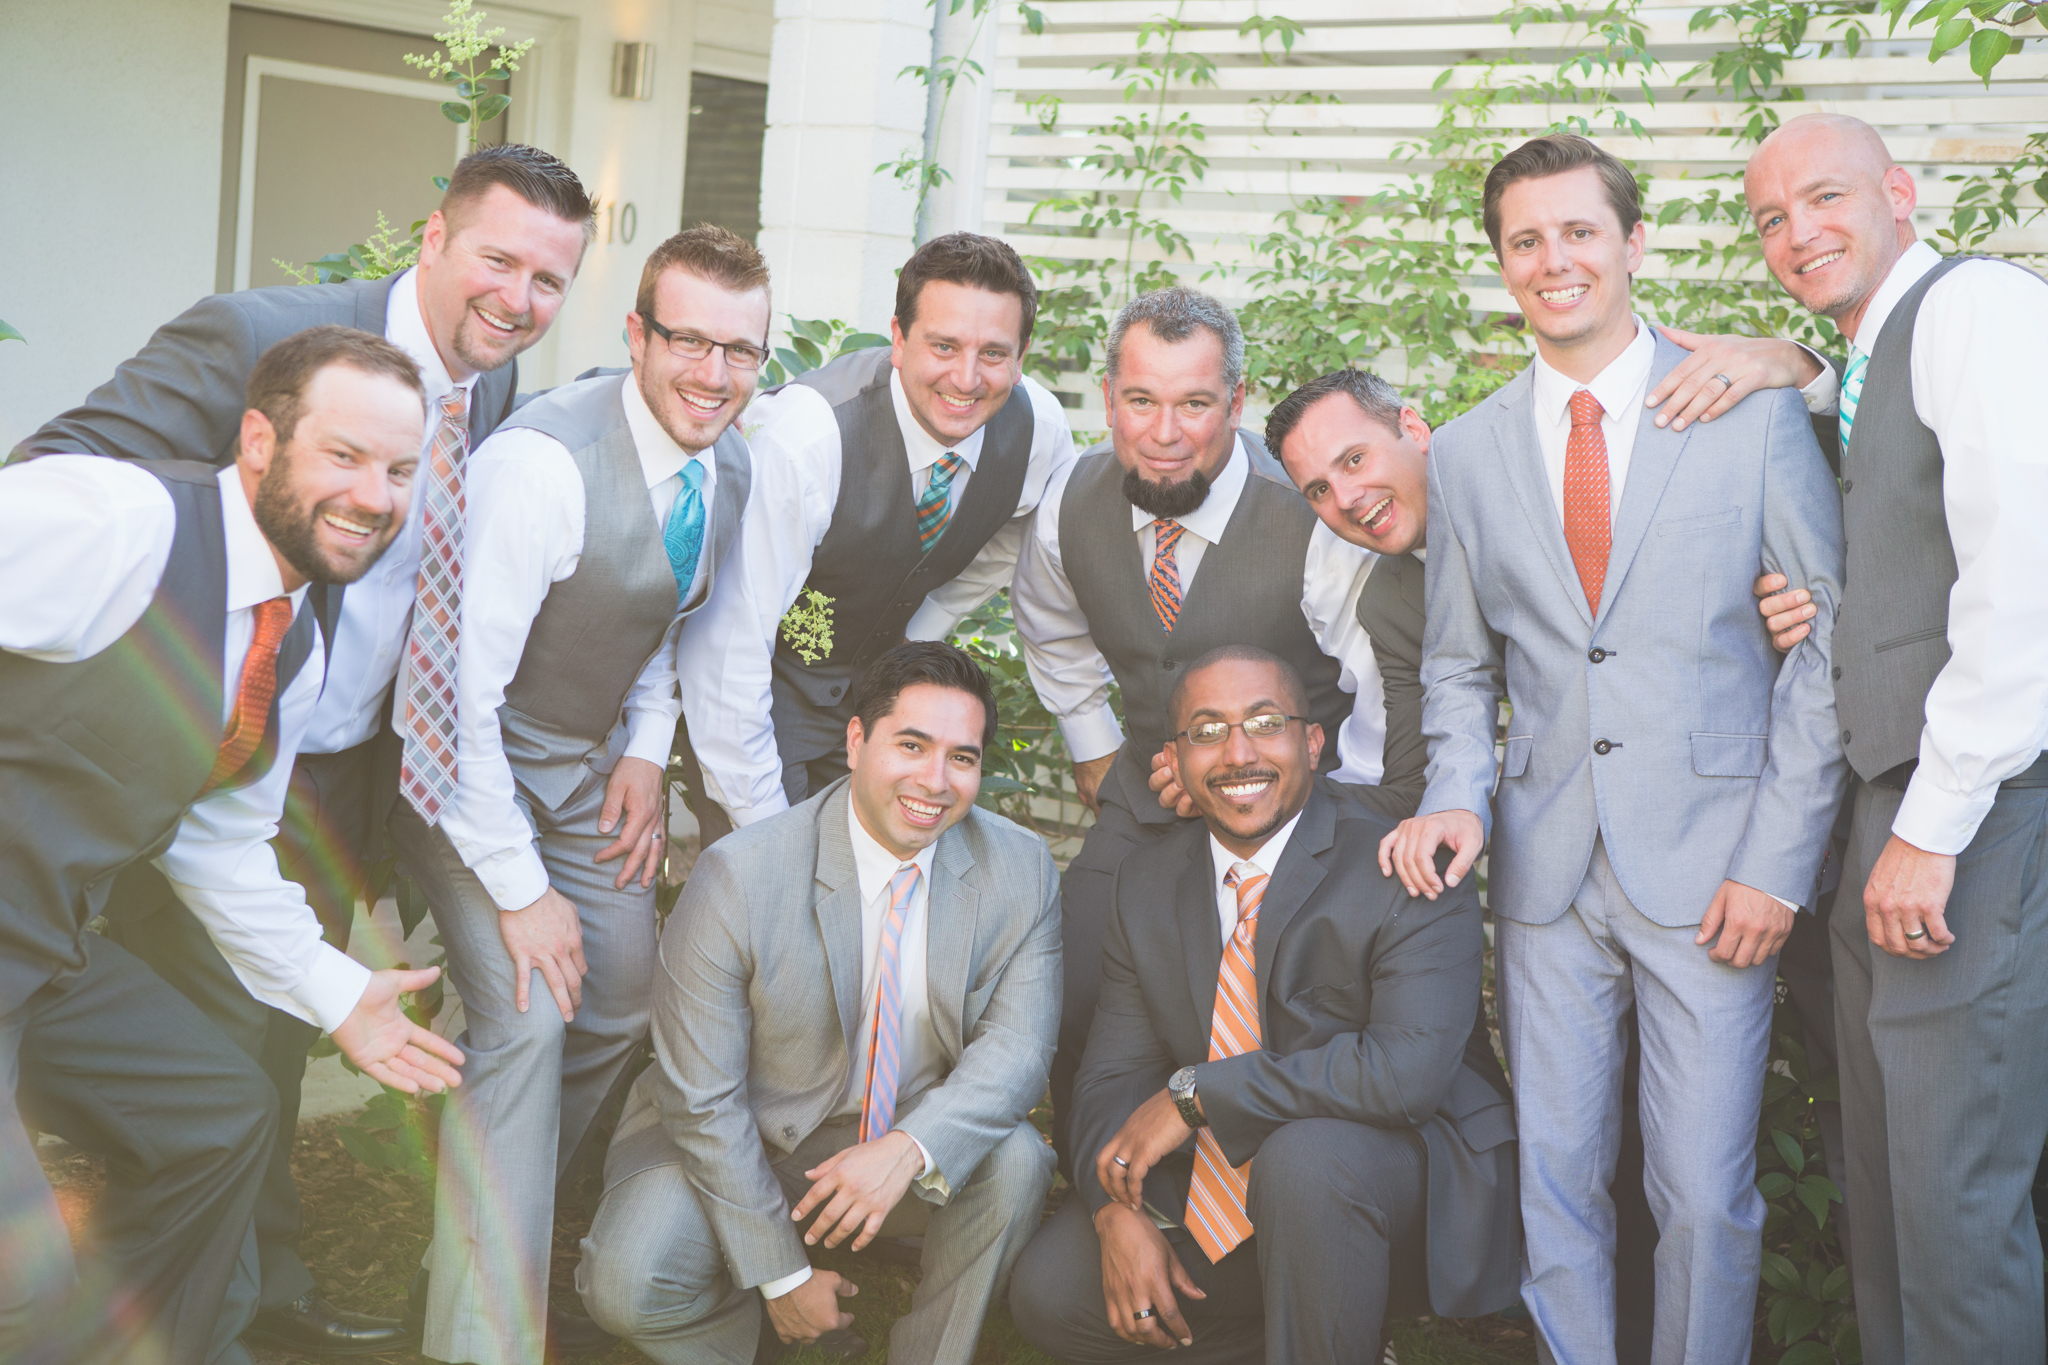 scottsdale-wedding-photographer-el-dorado-groom-groomsmen-buddies